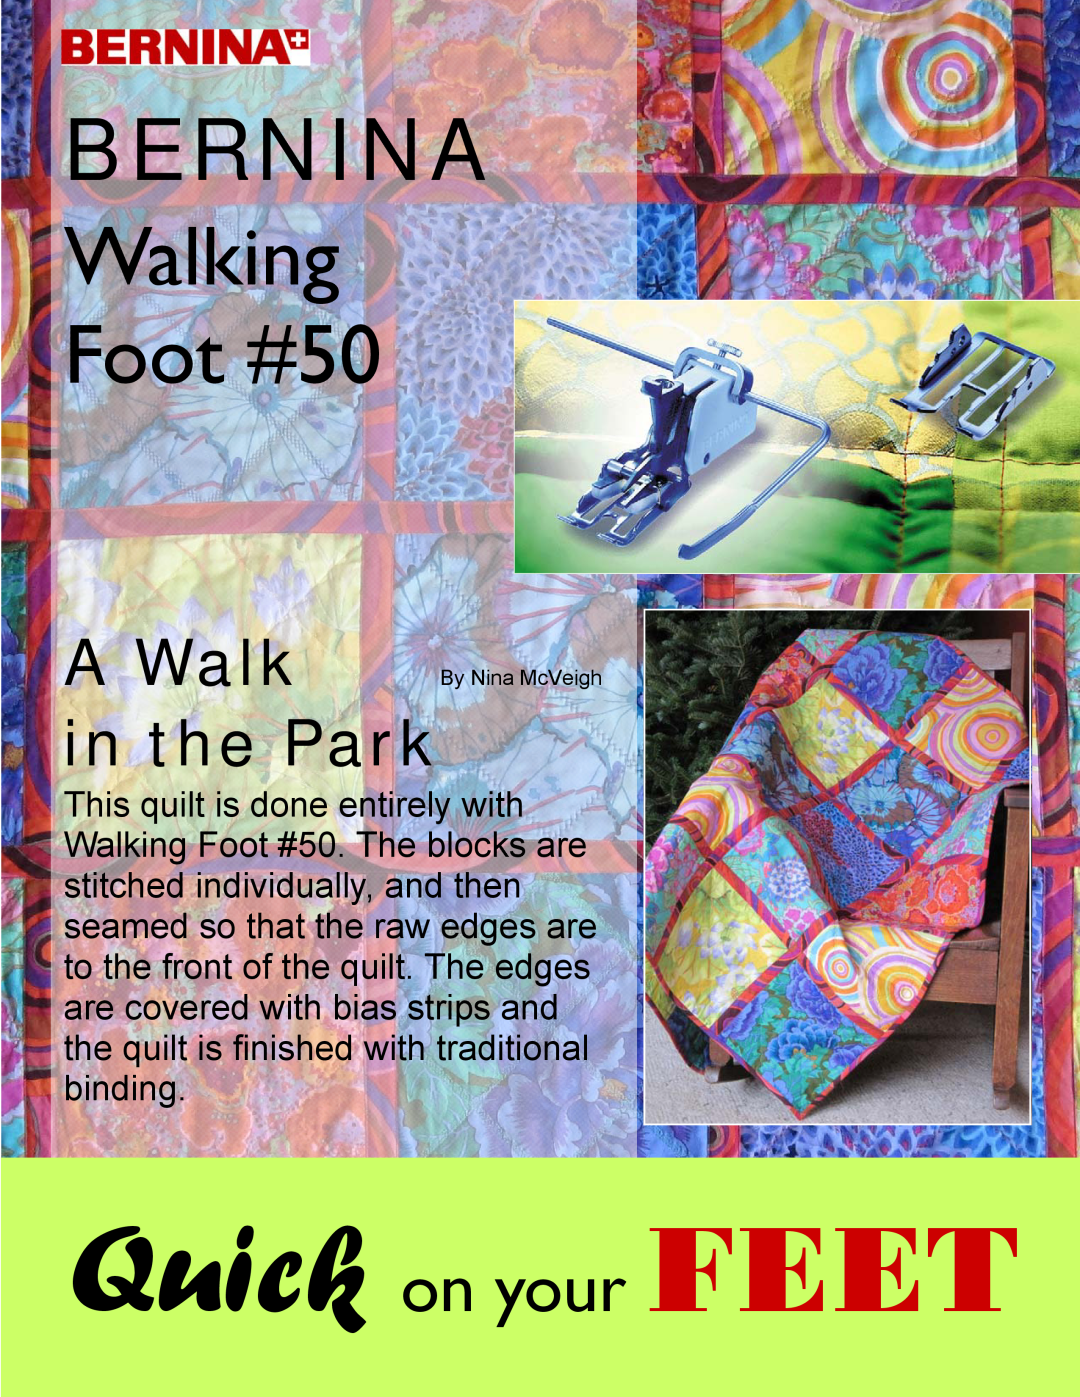 Bernina manual Bernina, Walking Foot #50, Quick on your FEET, in the Park, A Walk By Nina McVeigh 